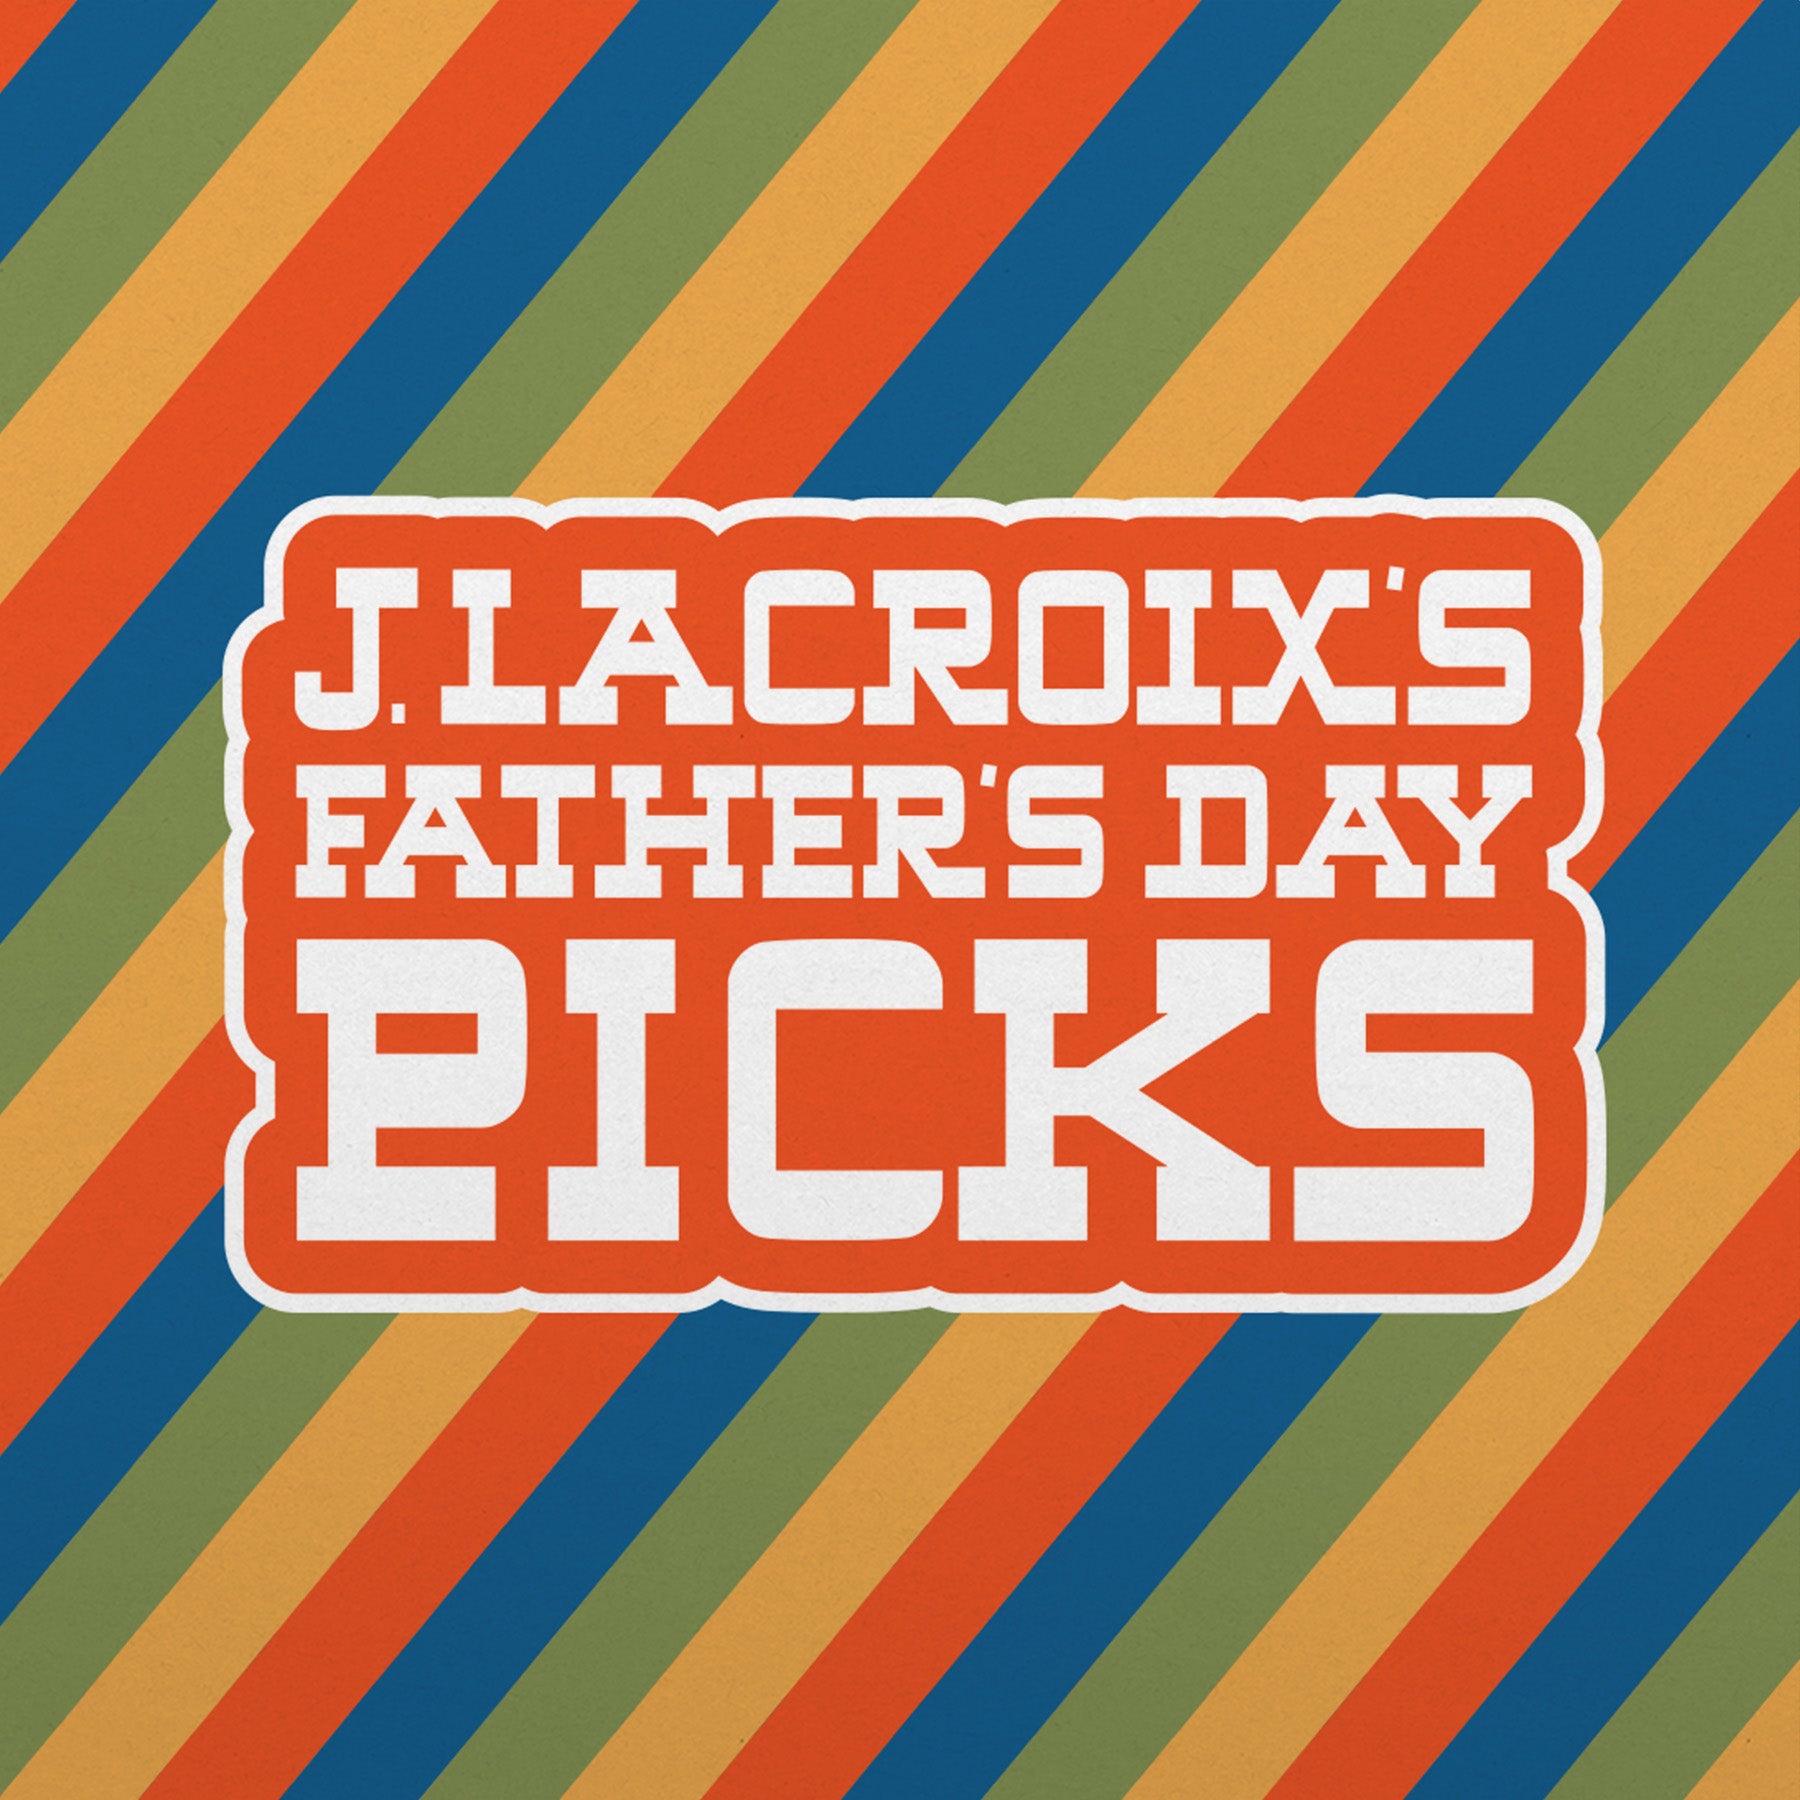 J. LaCroix's Father's Day Picks